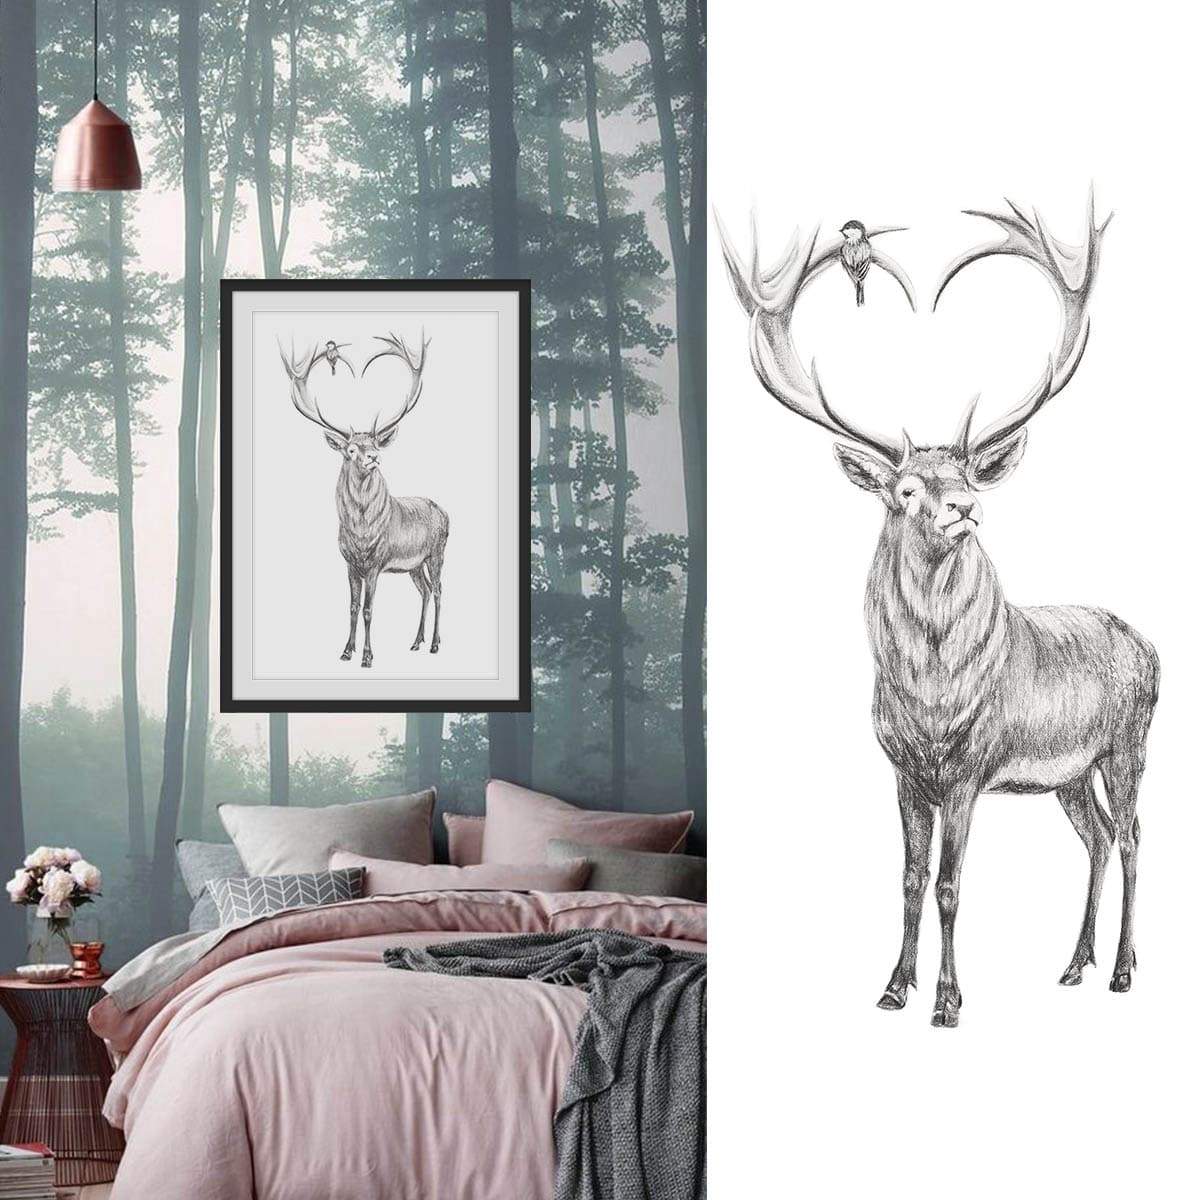 Deer with heart shaped antlers - LE NID atelier